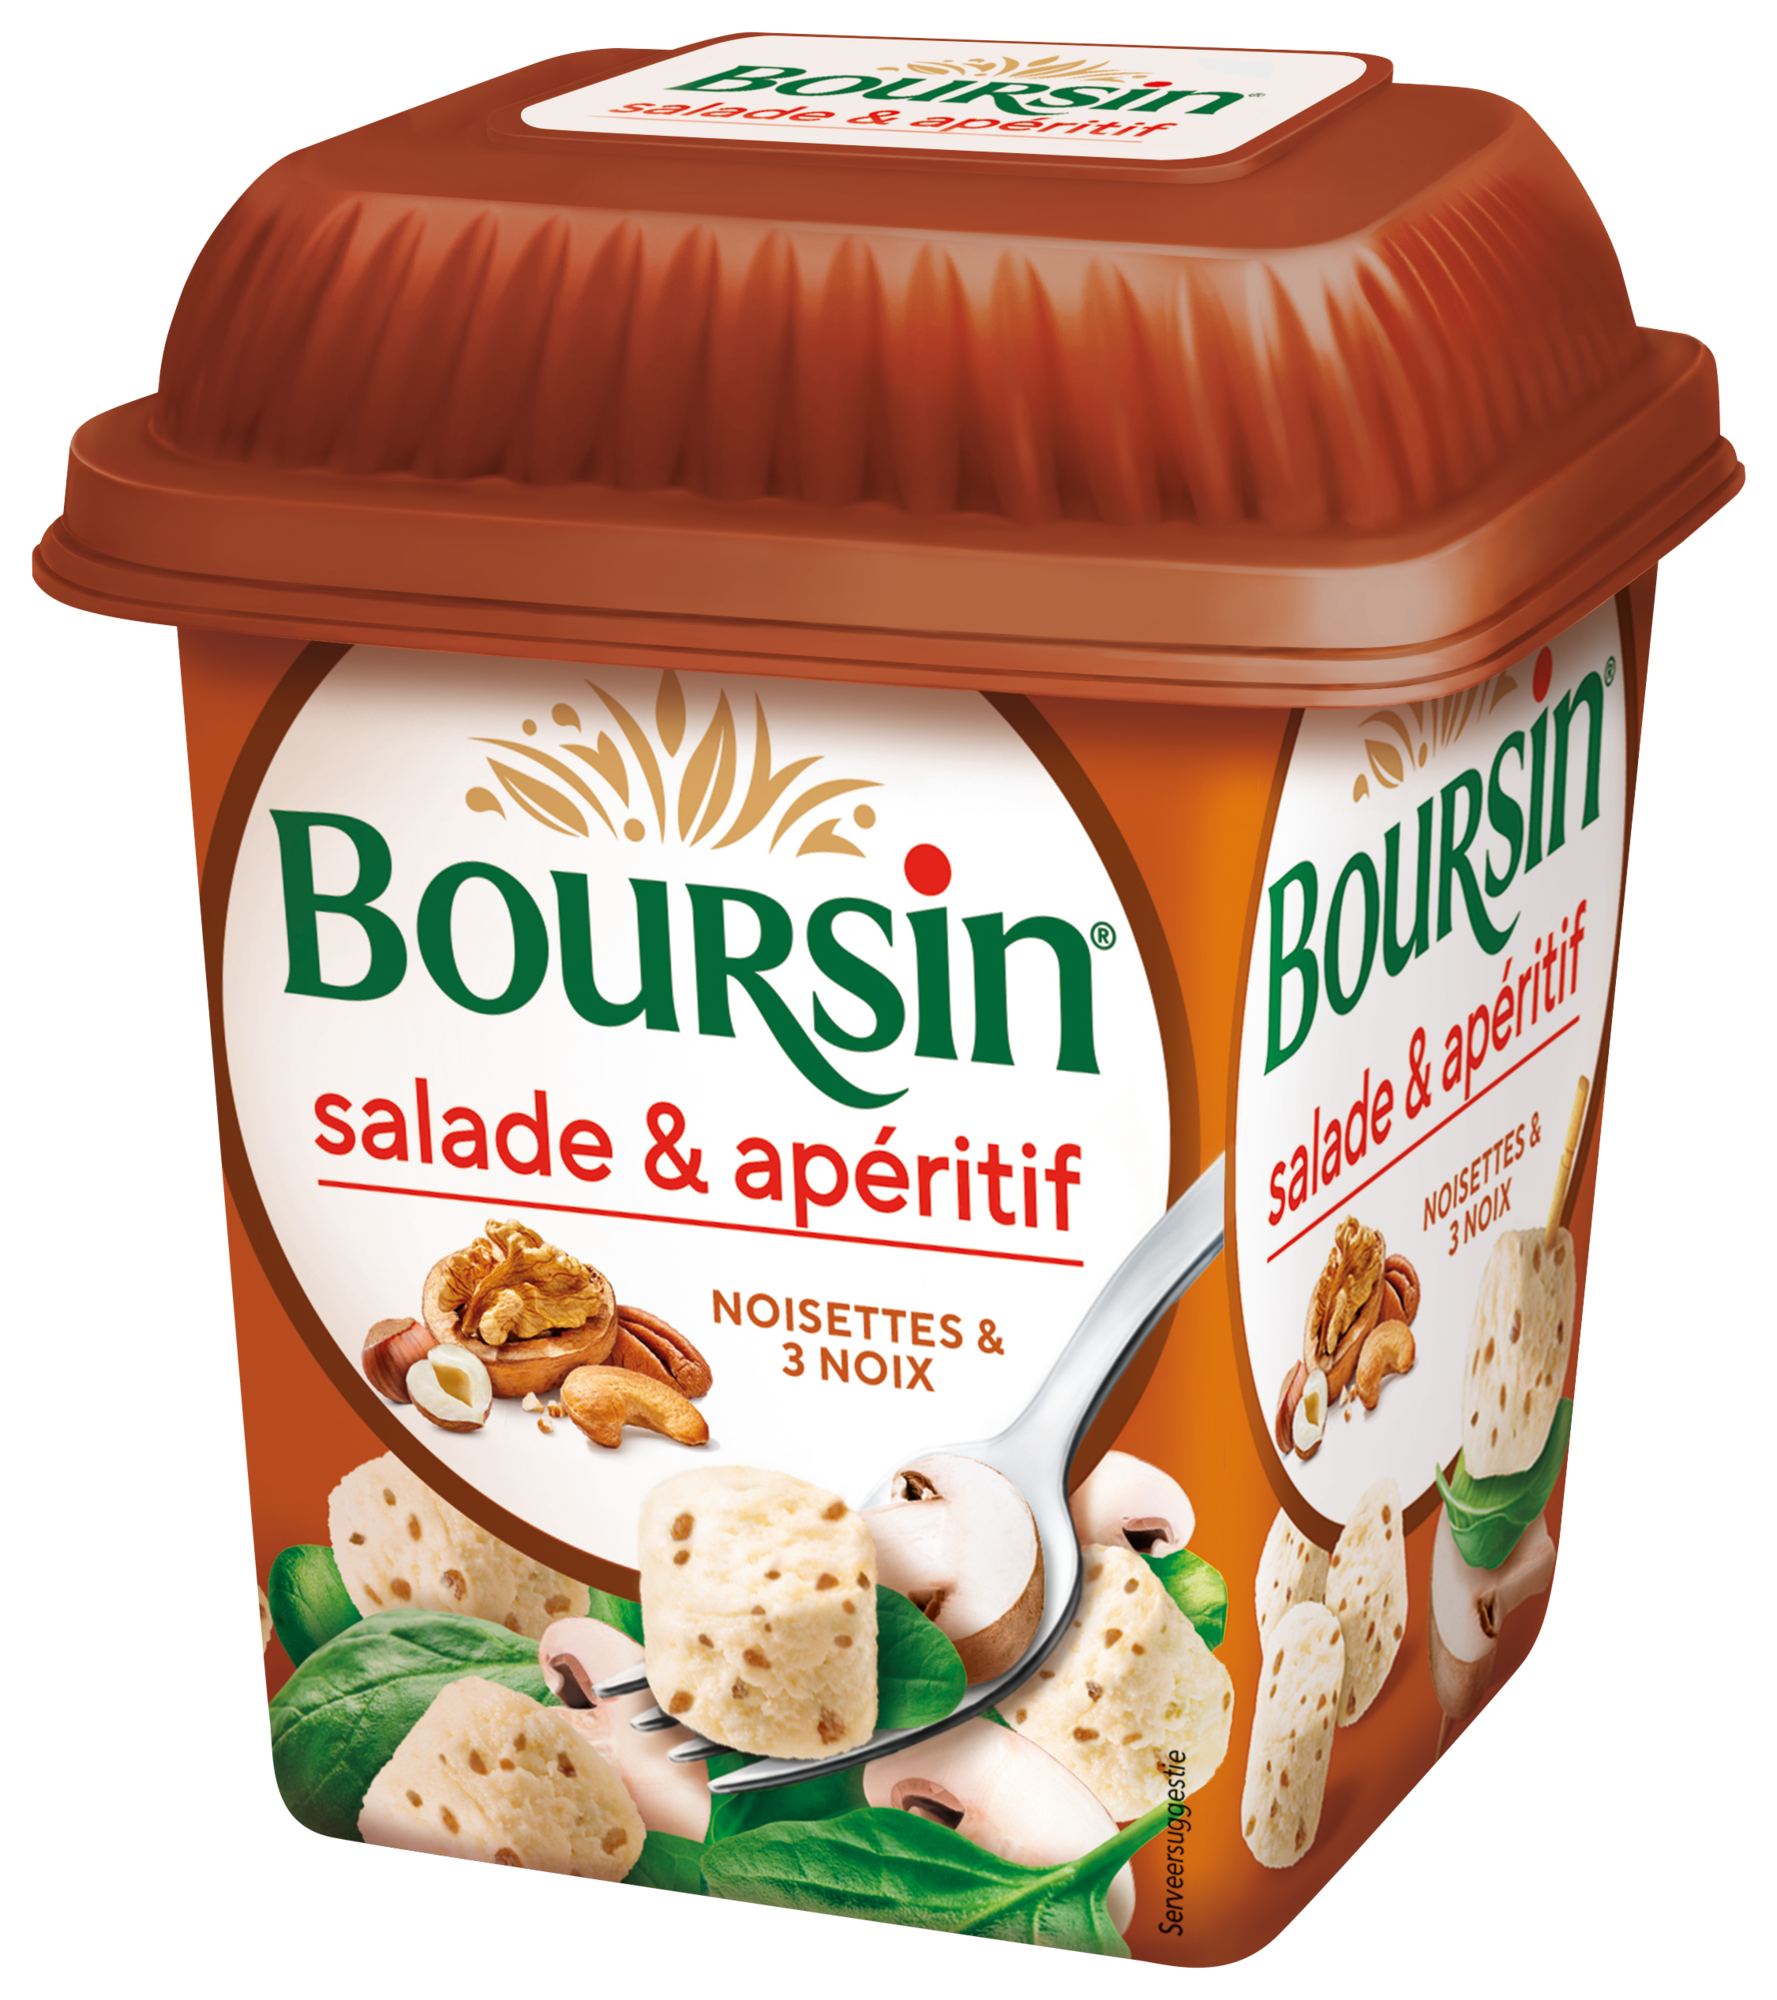 Boursin Salade & Apéritif noisettes & 3 noix  41,5 % mat. gr.